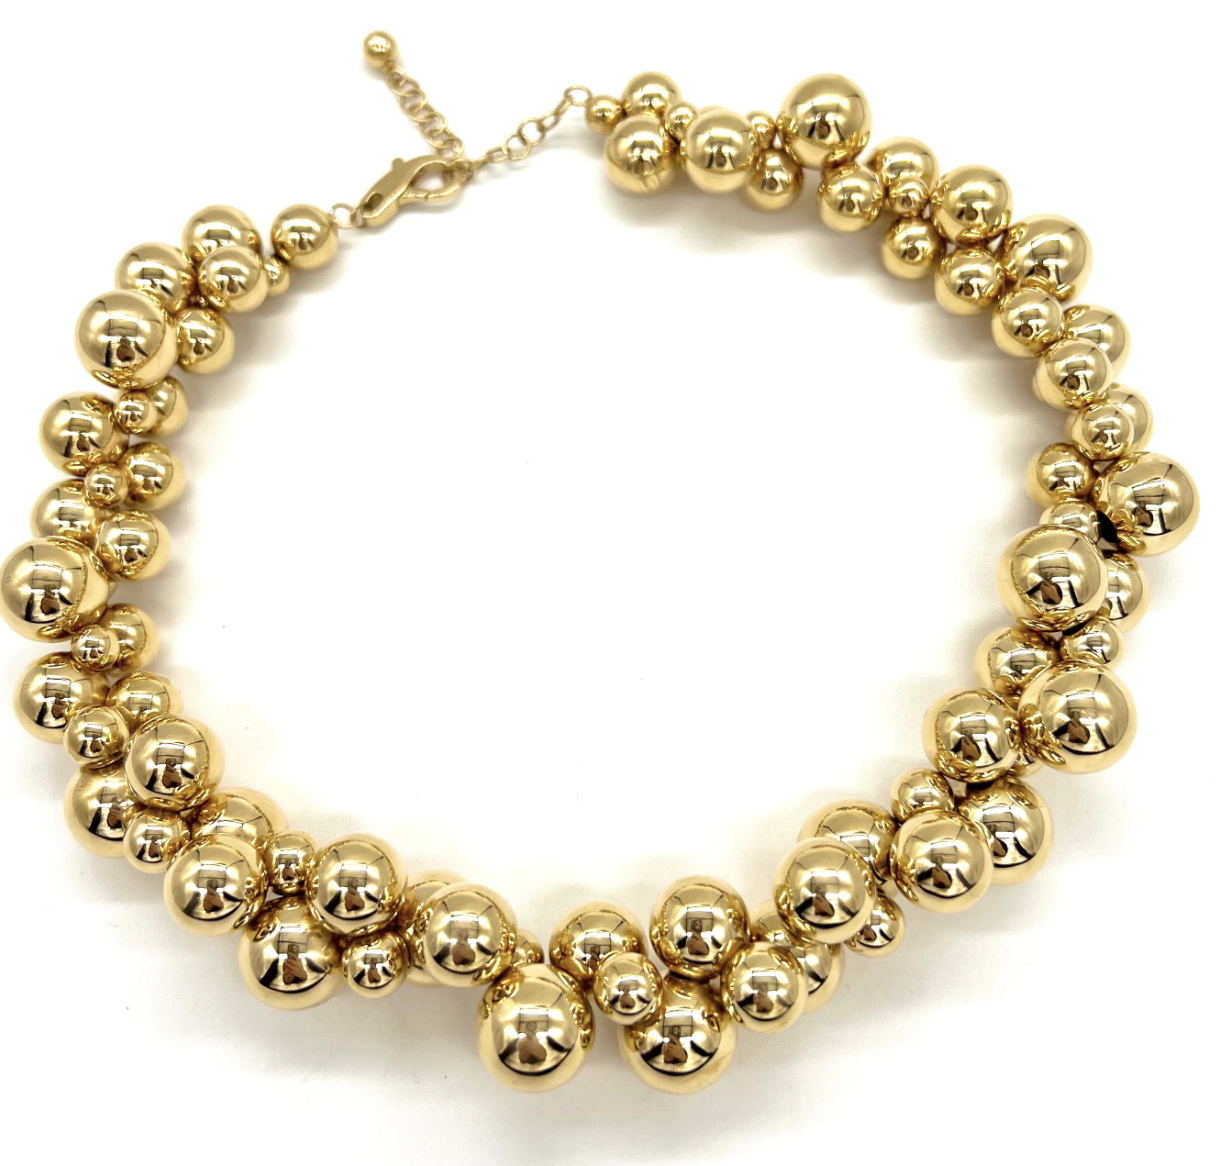 Marina B Atomo necklace in 18k gold baubles - Eleuteri